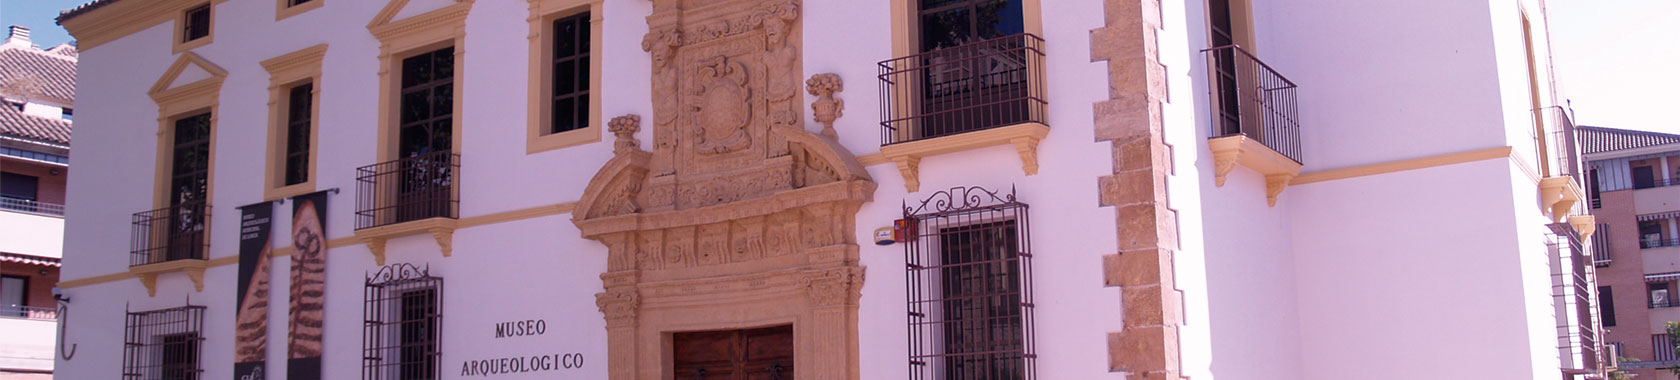 fachada del museo